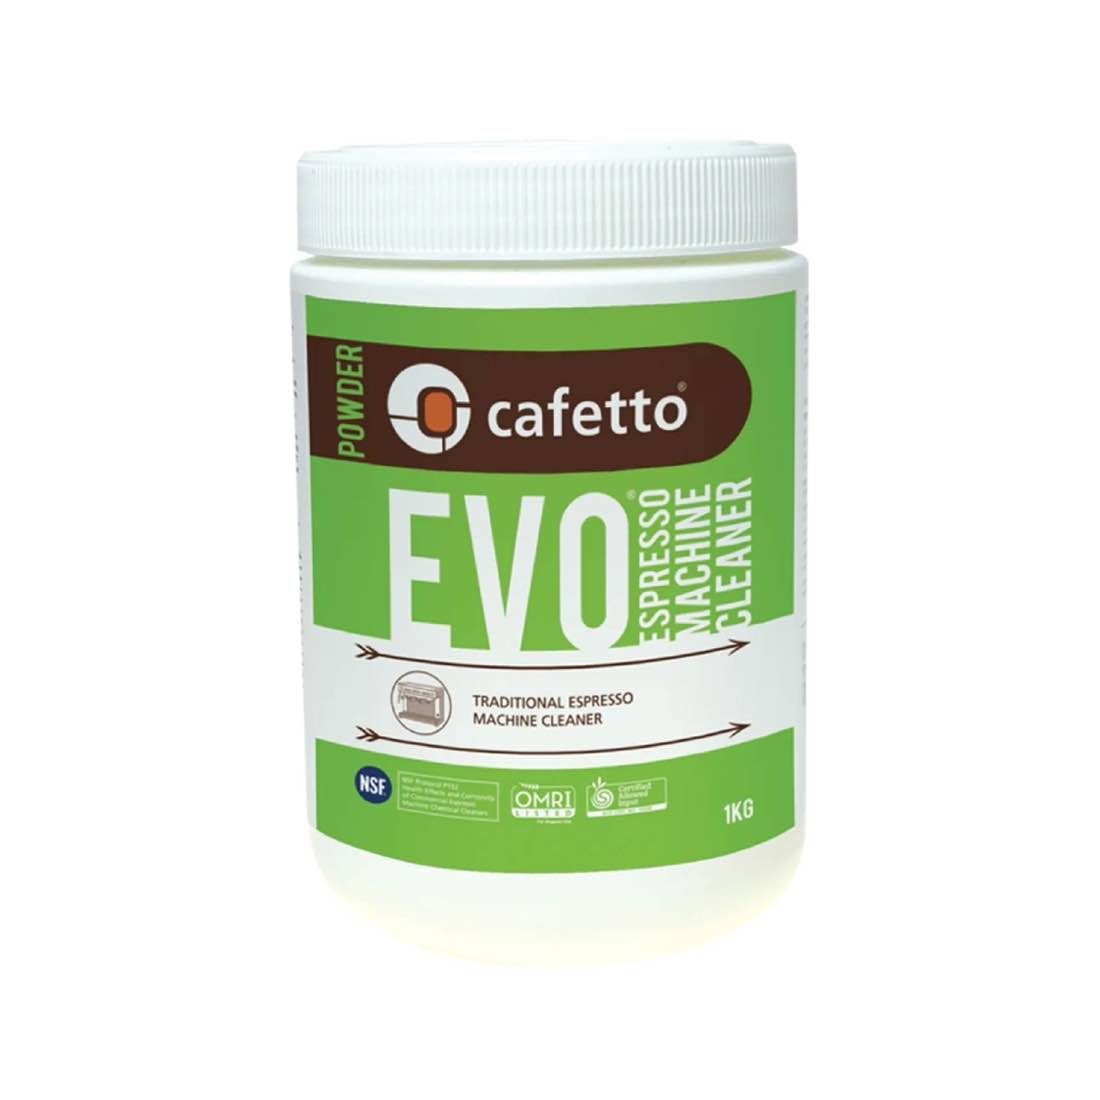 Cafetto EVO Nettoyeur - Image 3